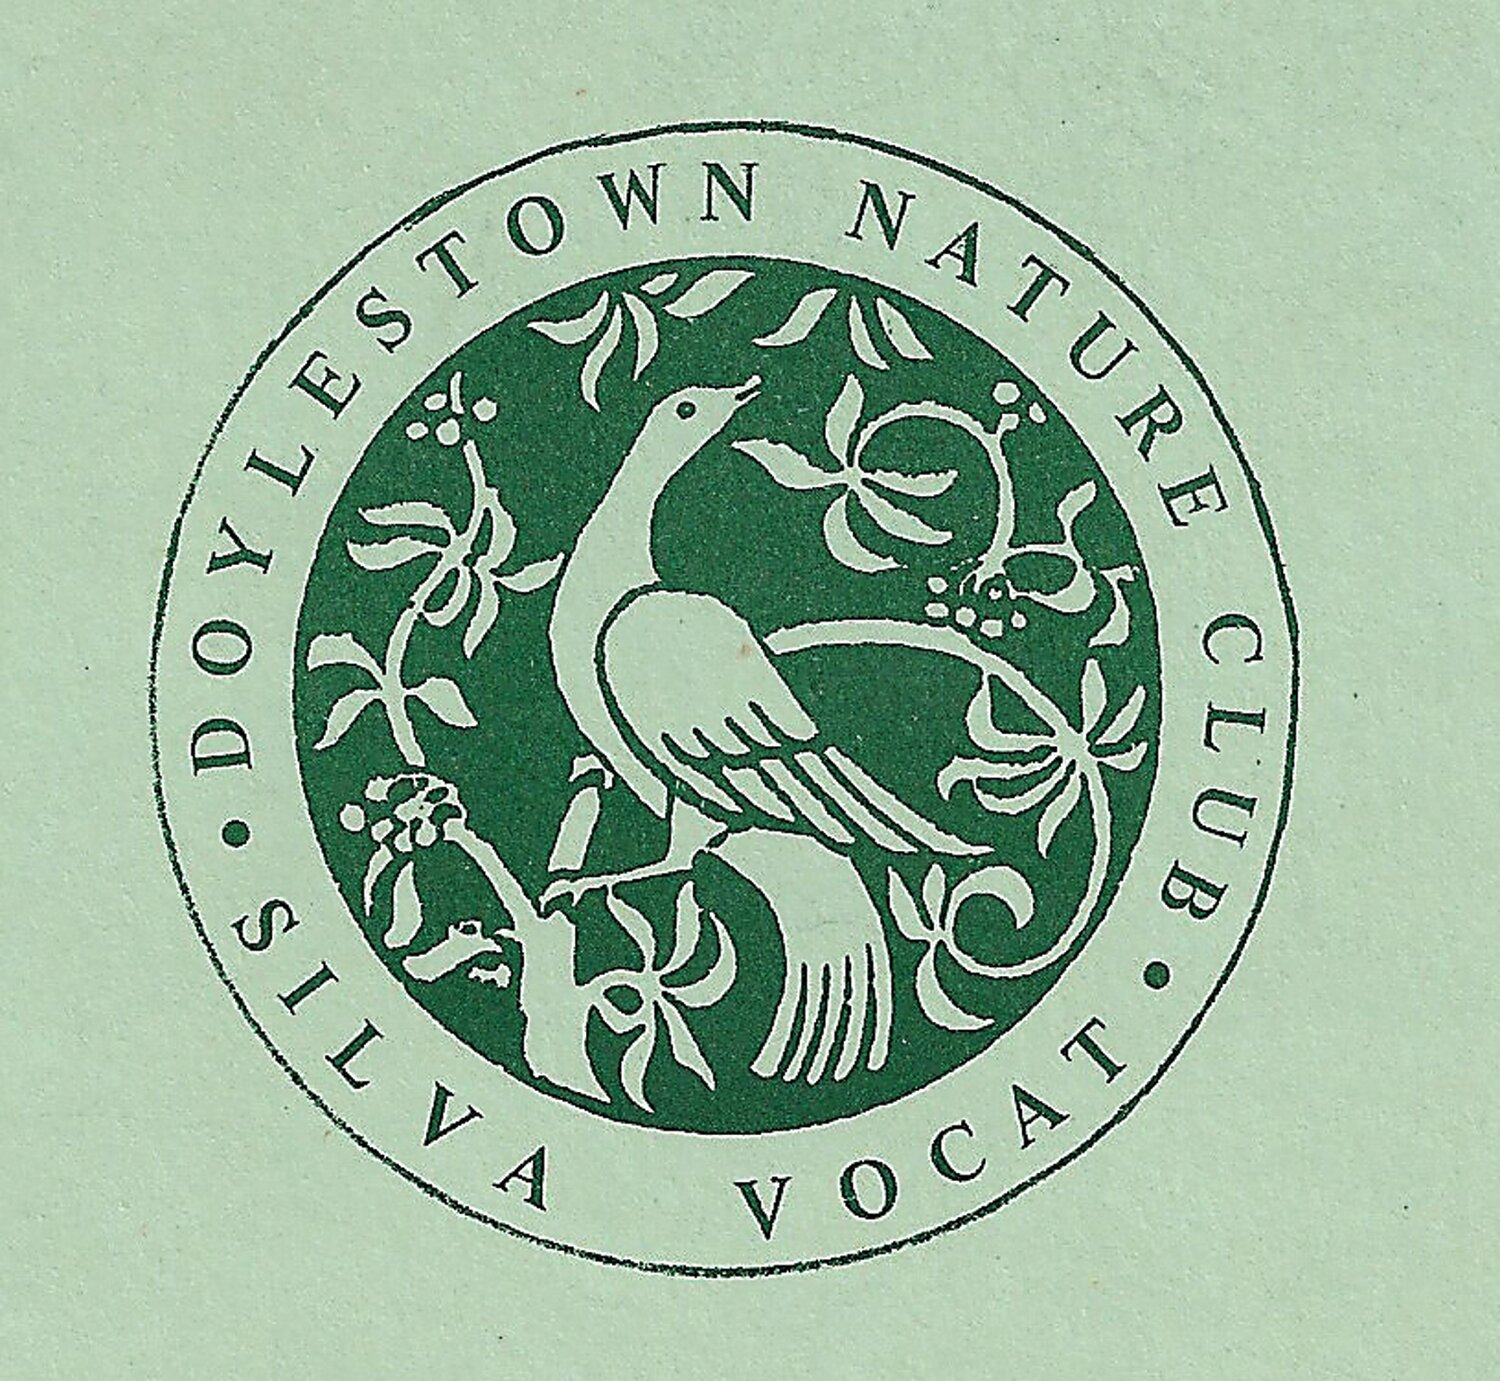 The Doylestown Nature Club’s logo.